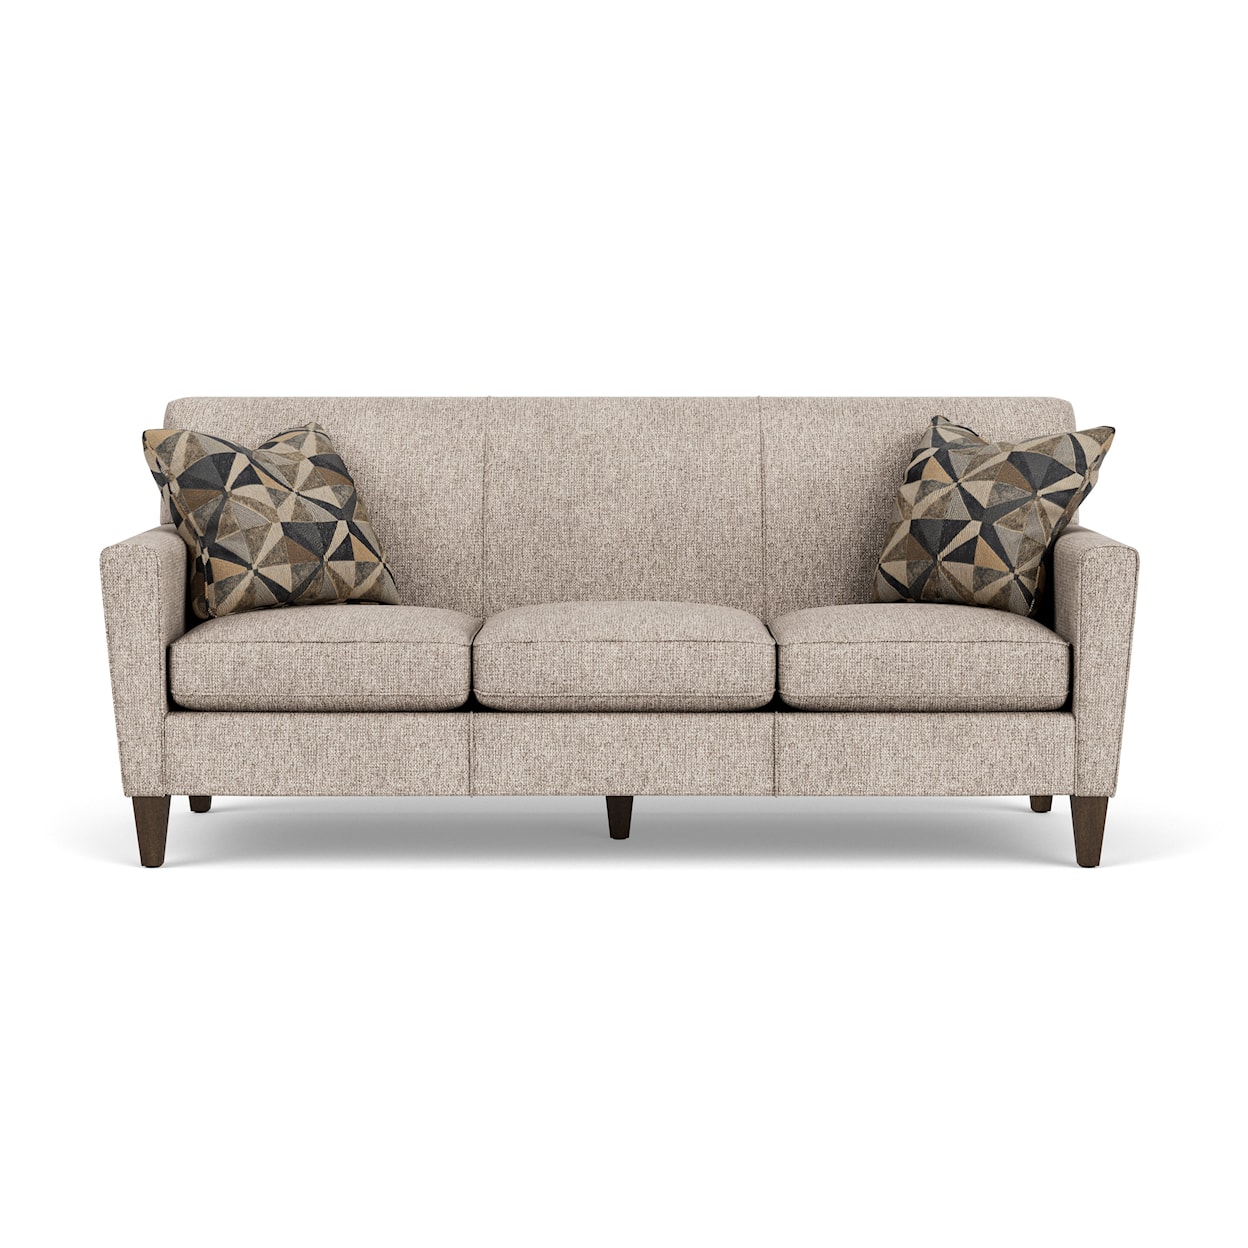 Flexsteel Digby Upholstered Sofa